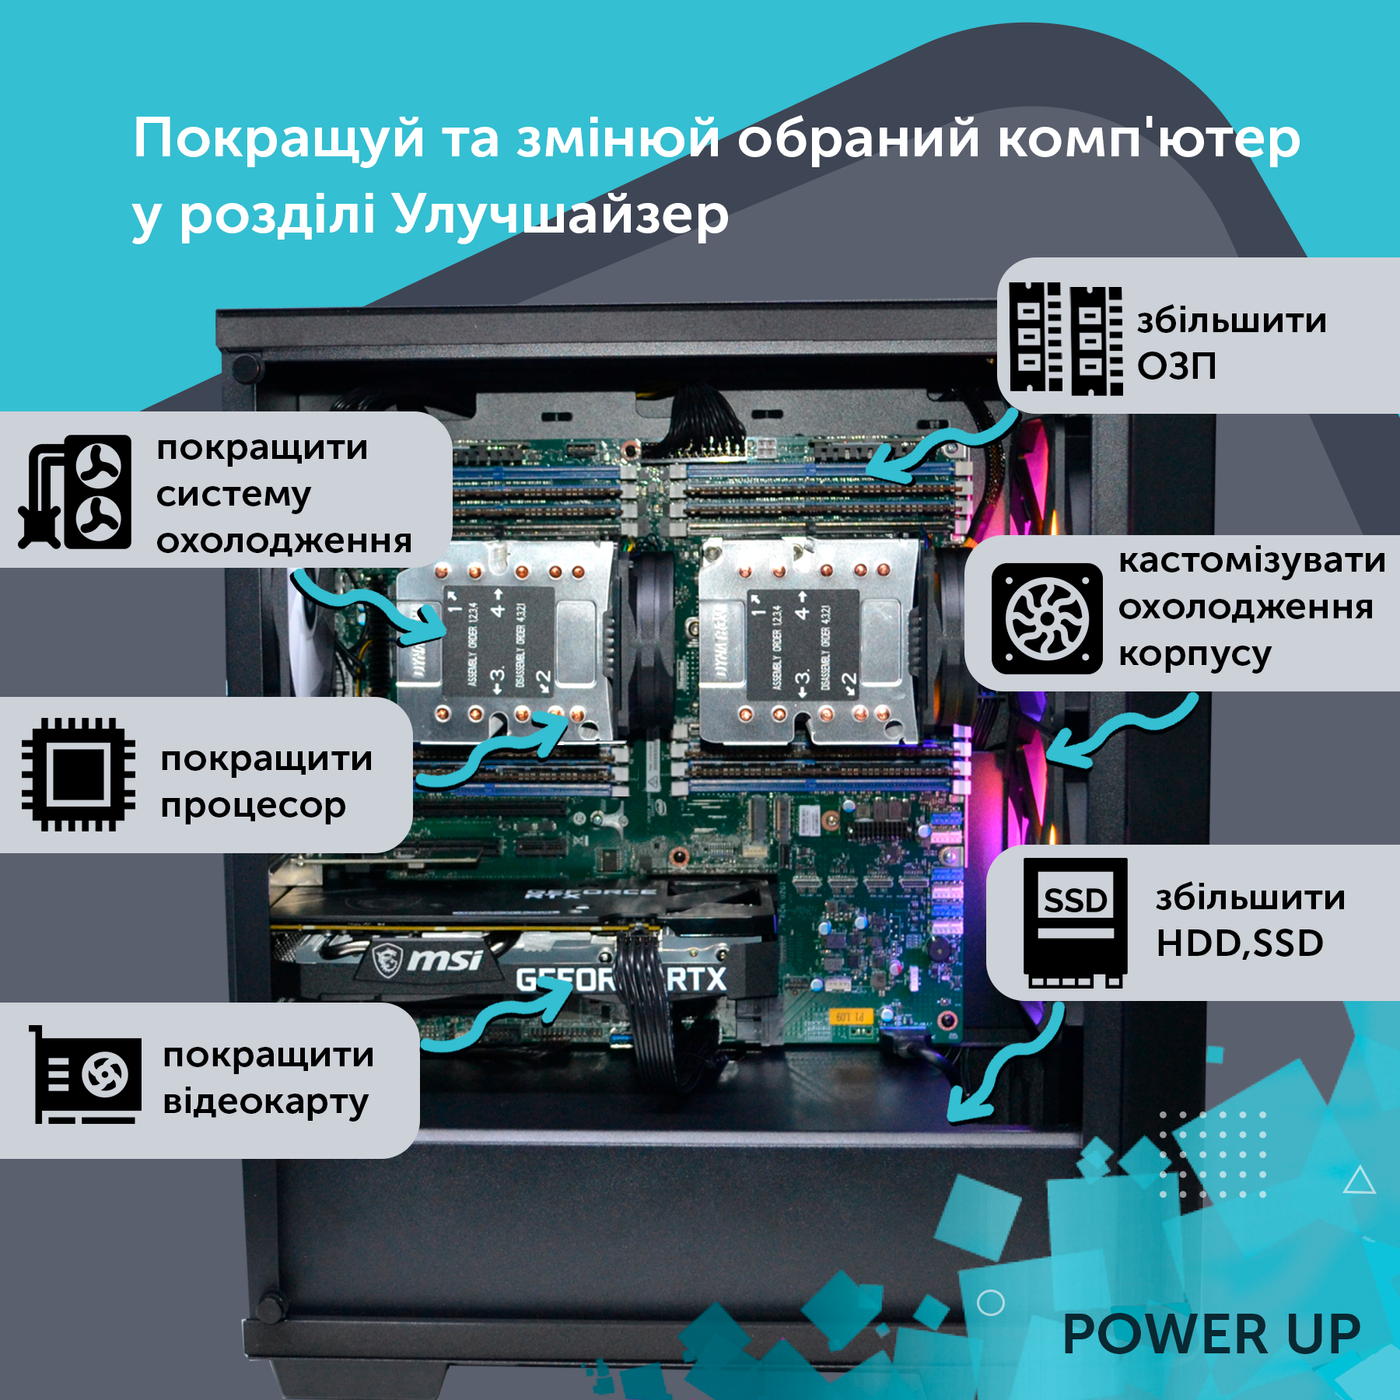 Сервер двухпроцессорный TOWER PowerUp #29 Xeon E5 2690 v3 x2/32 GB/SSD 256GB х2 Raid/Int Video